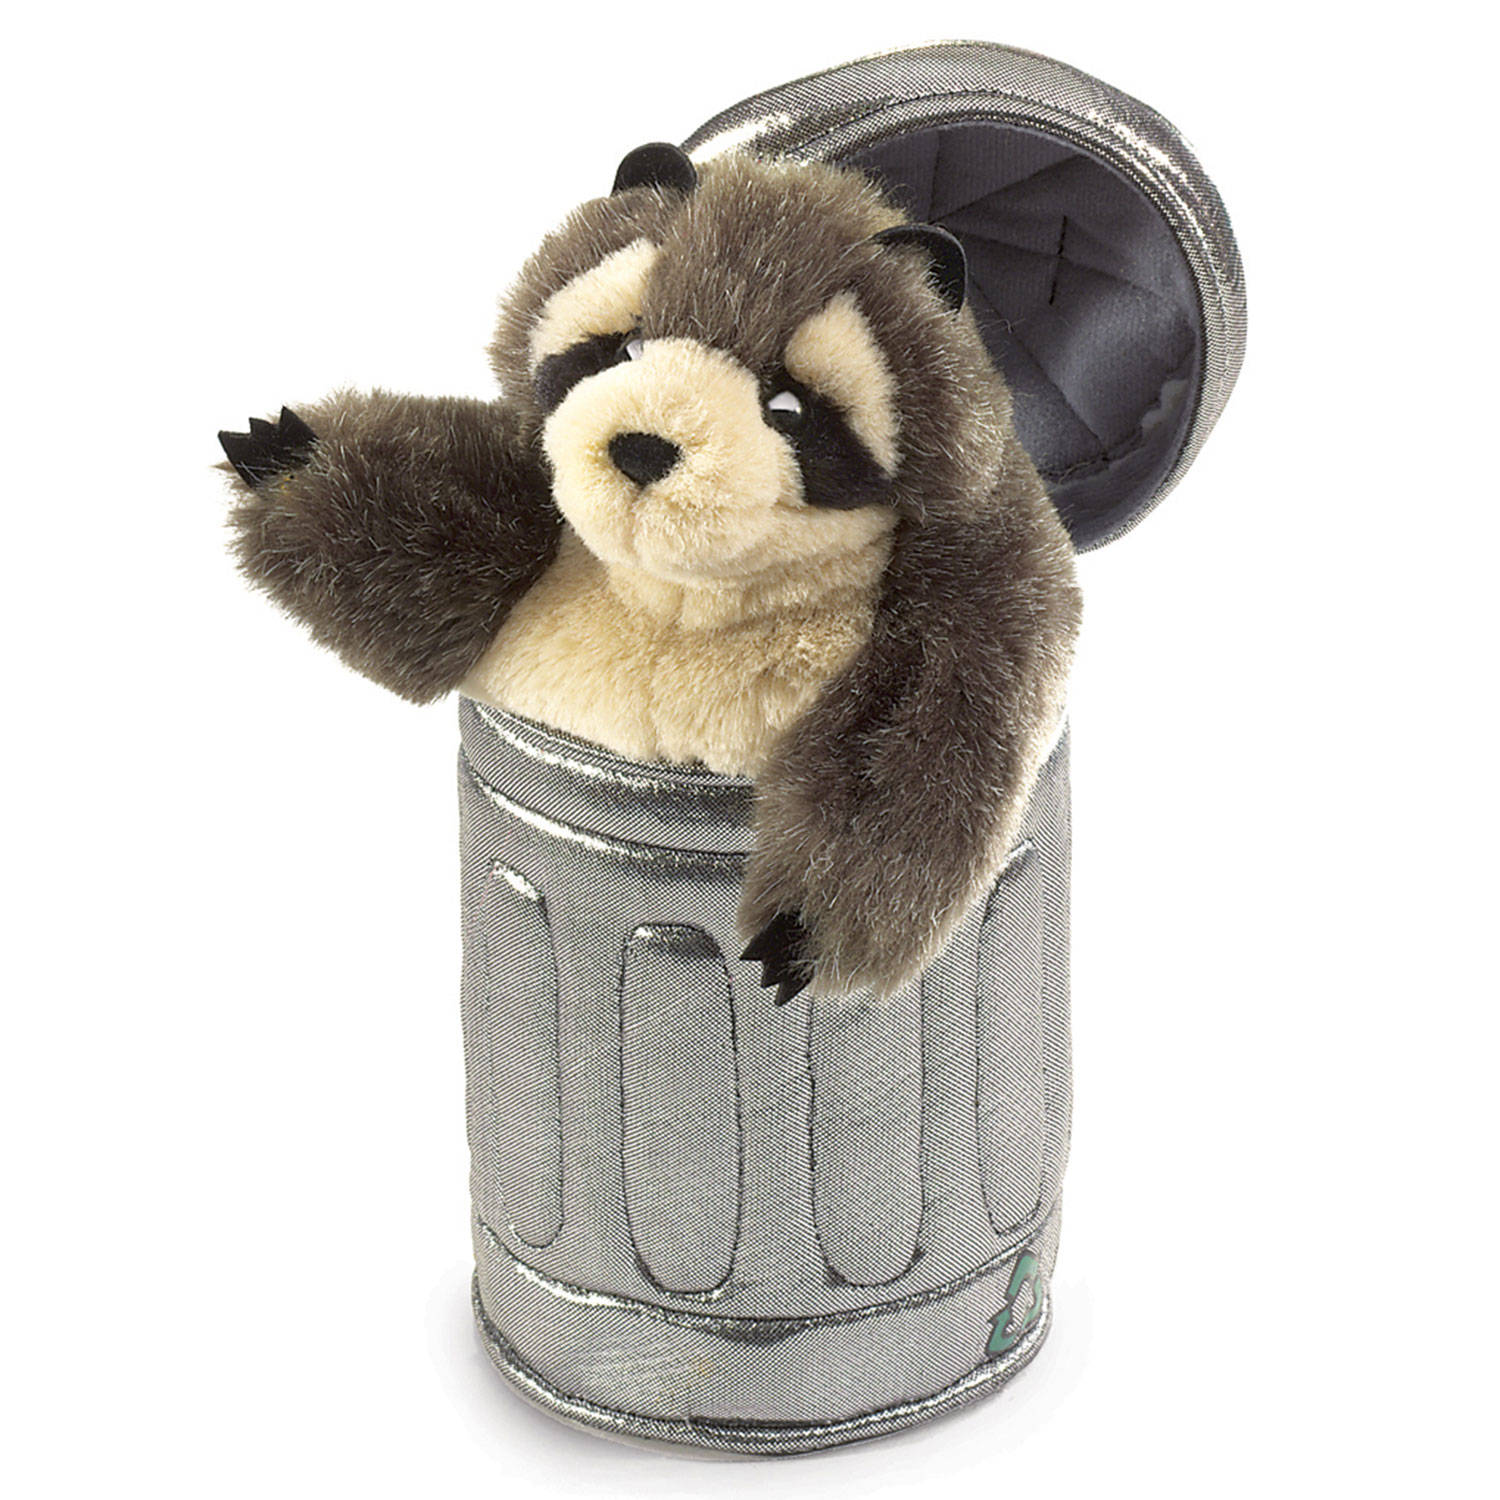 Folkmanis Raccoon in Garbage Can